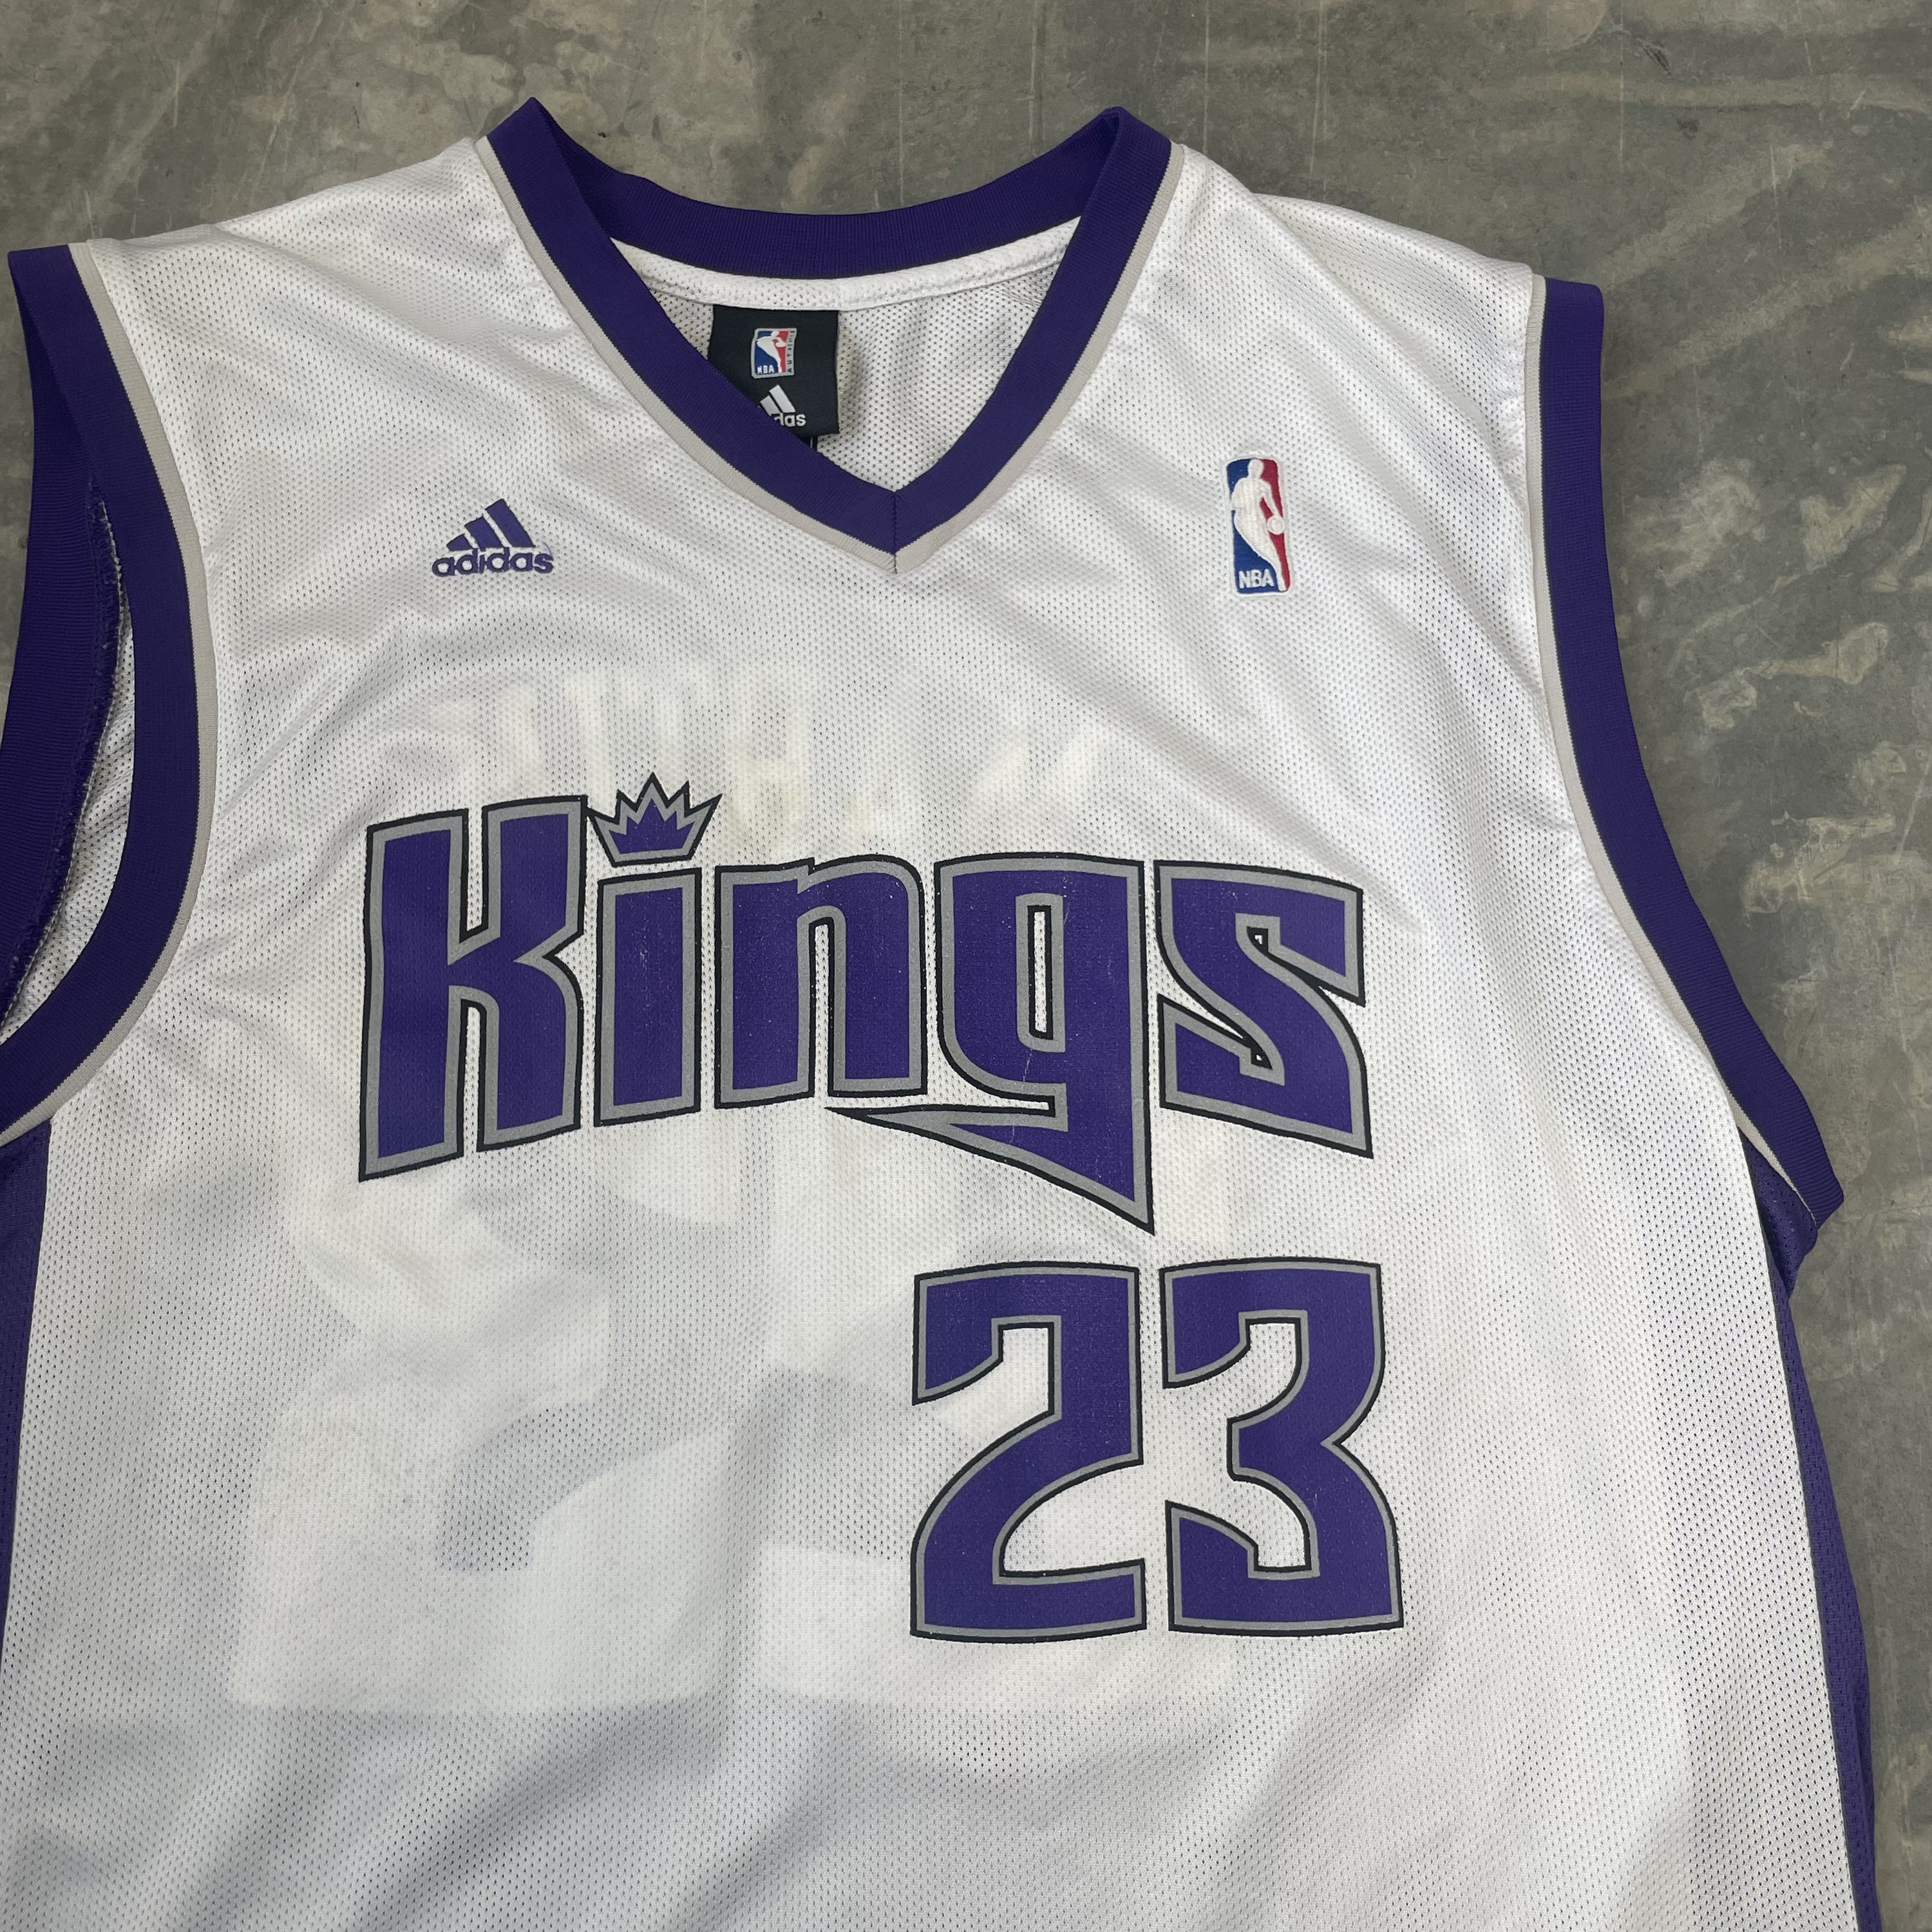 Sacramento Kings Jerseys, Kings Basketball Jerseys